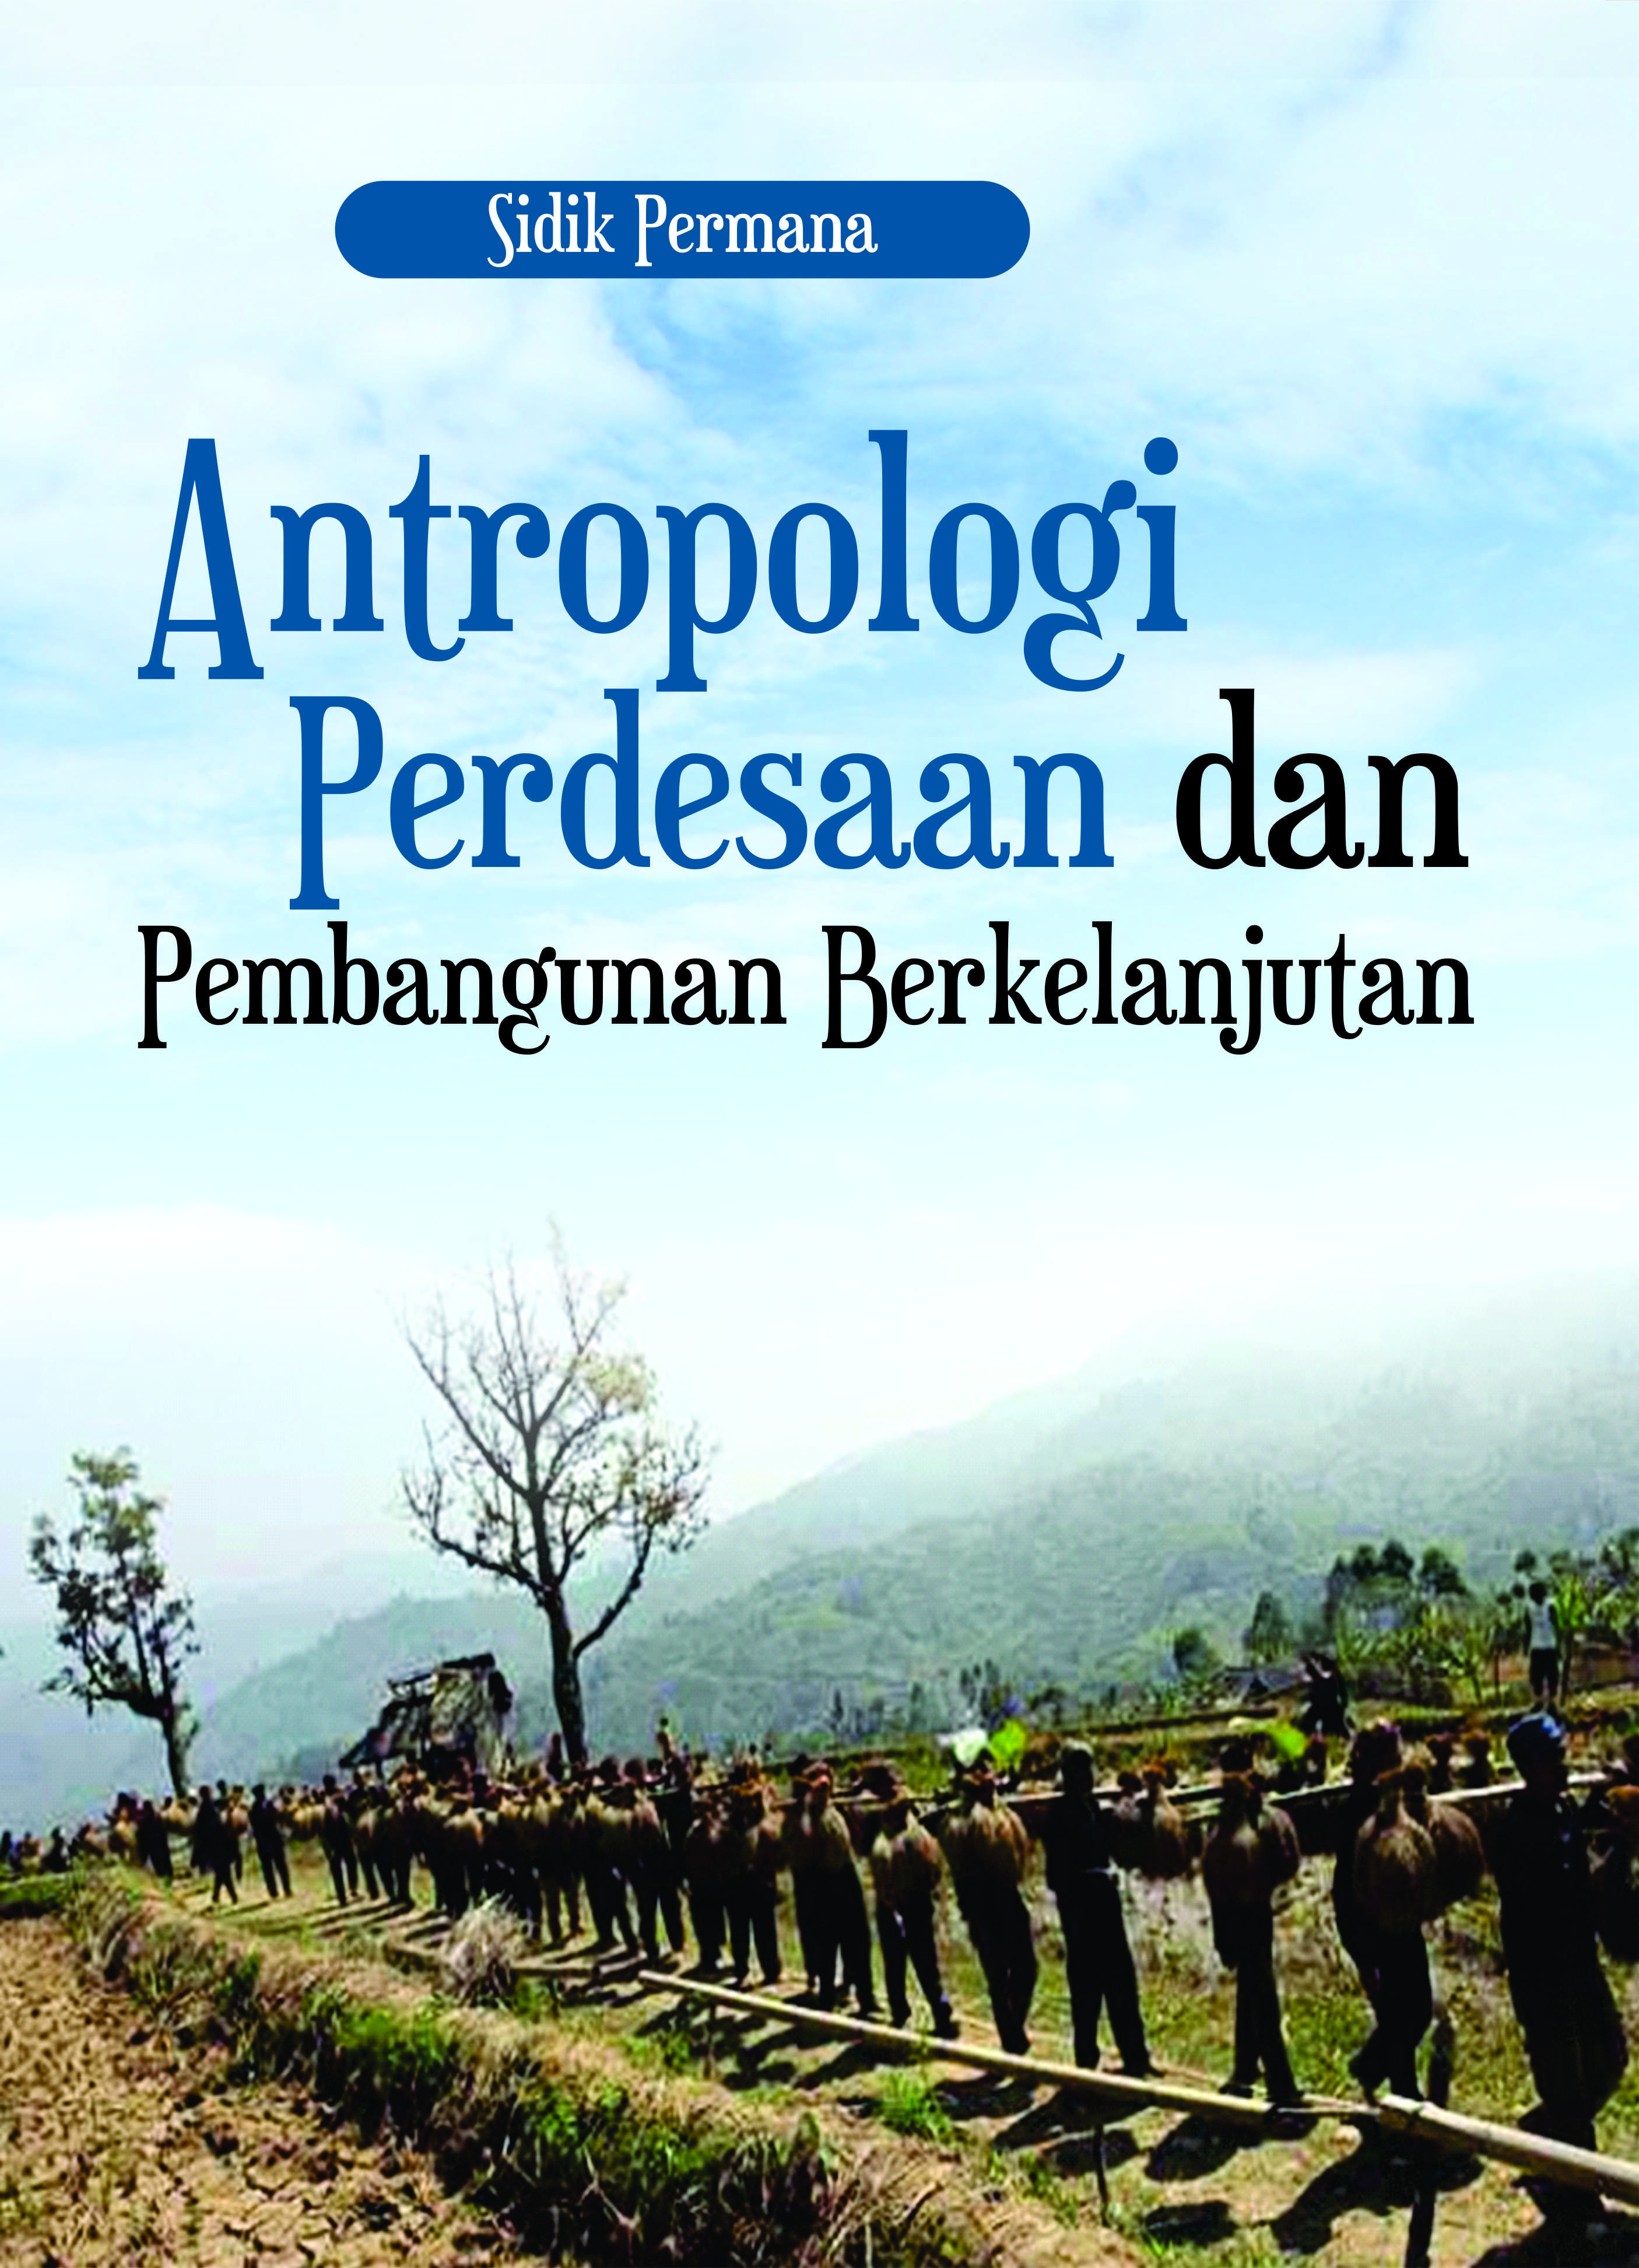 Download Buku Puji Syukur Katolik Pdf Convertergolkes